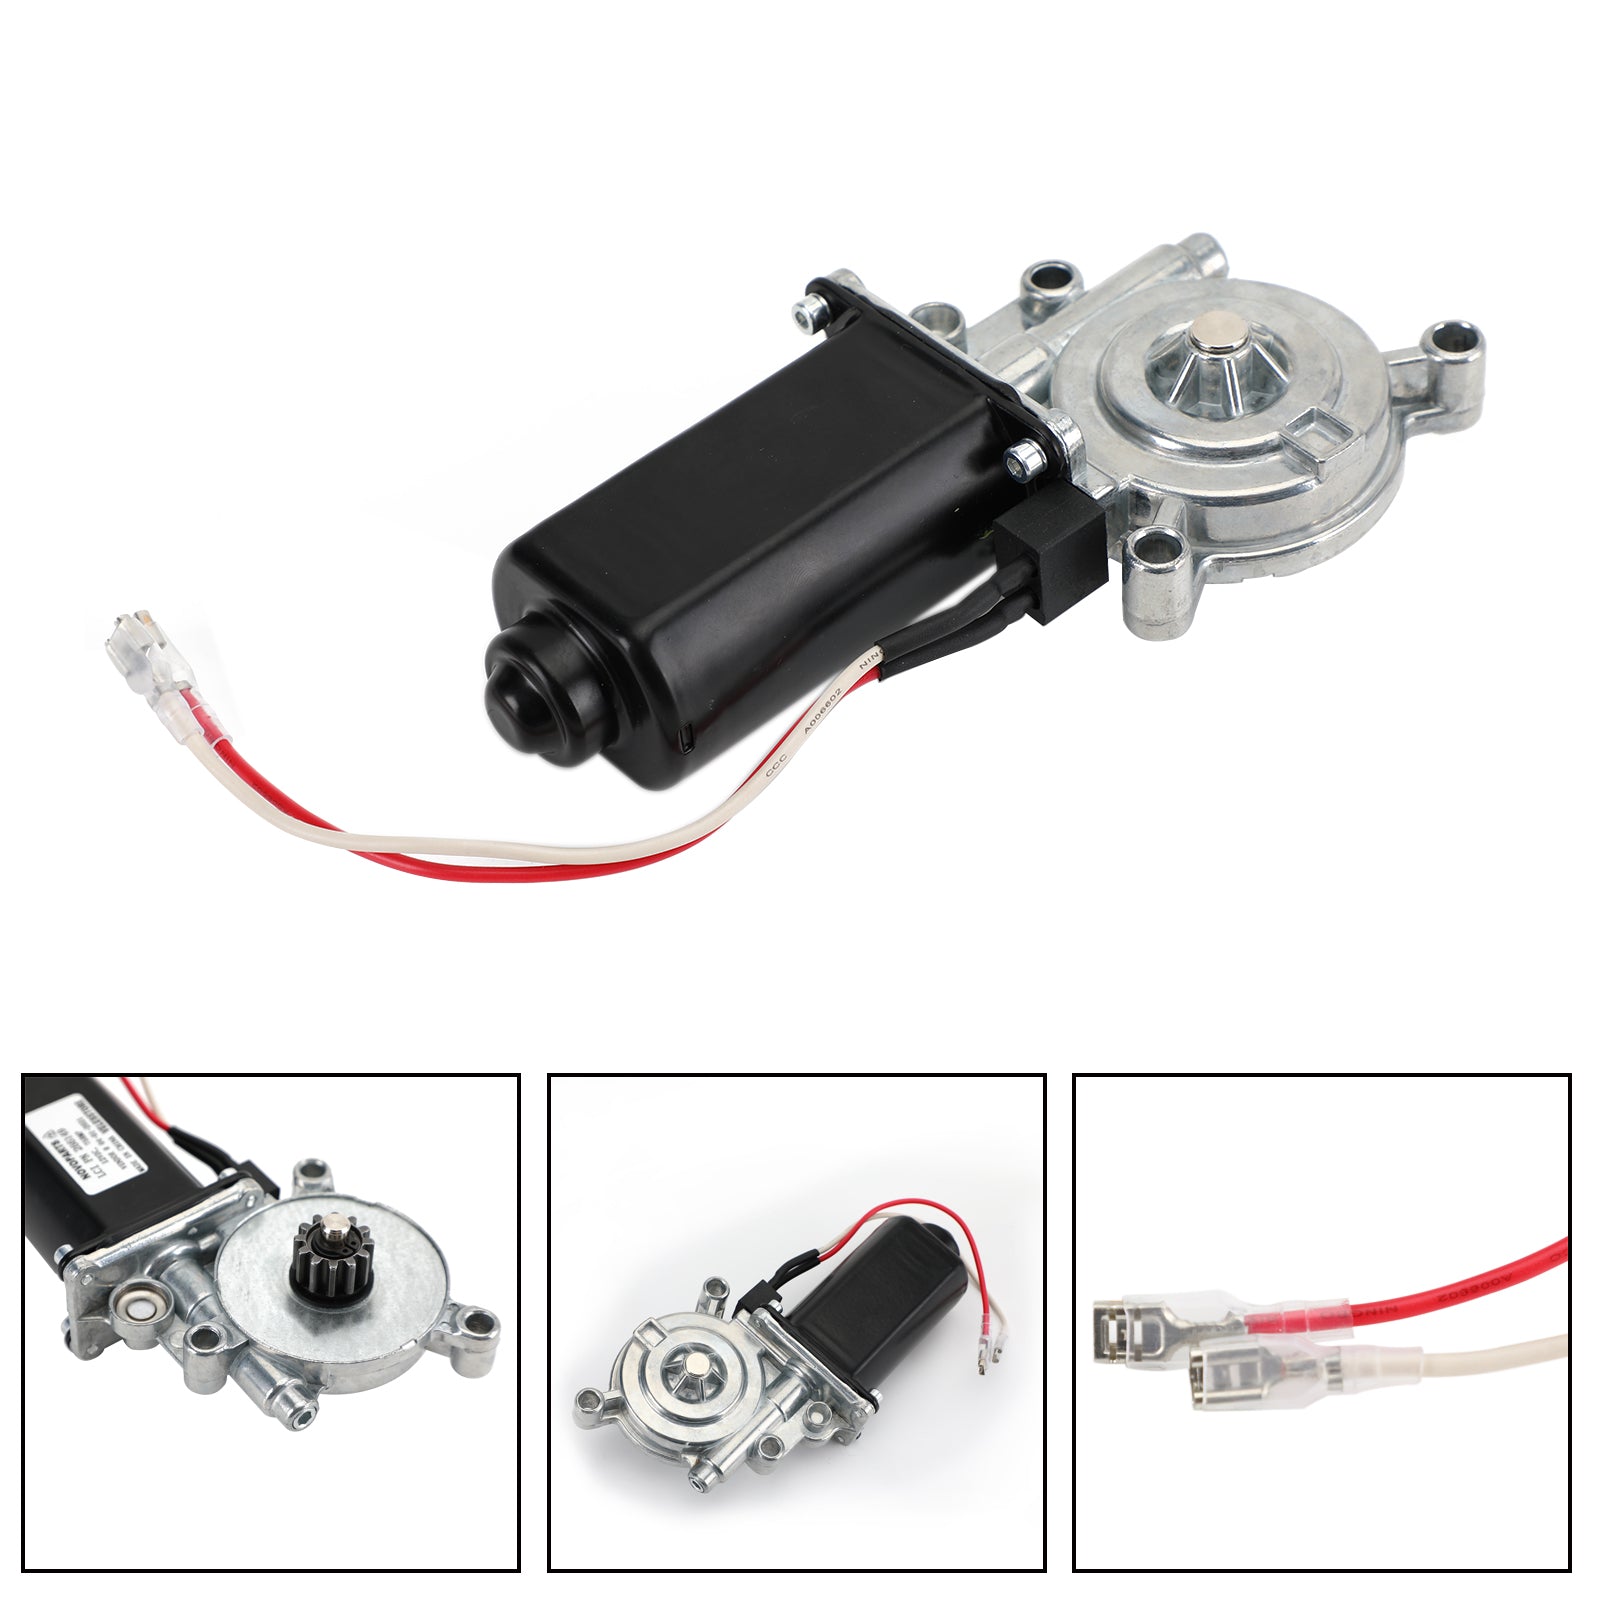 RV Motorhome Power Awning Motor for Solera Venture LCI Lippert 373566 266149 - 0